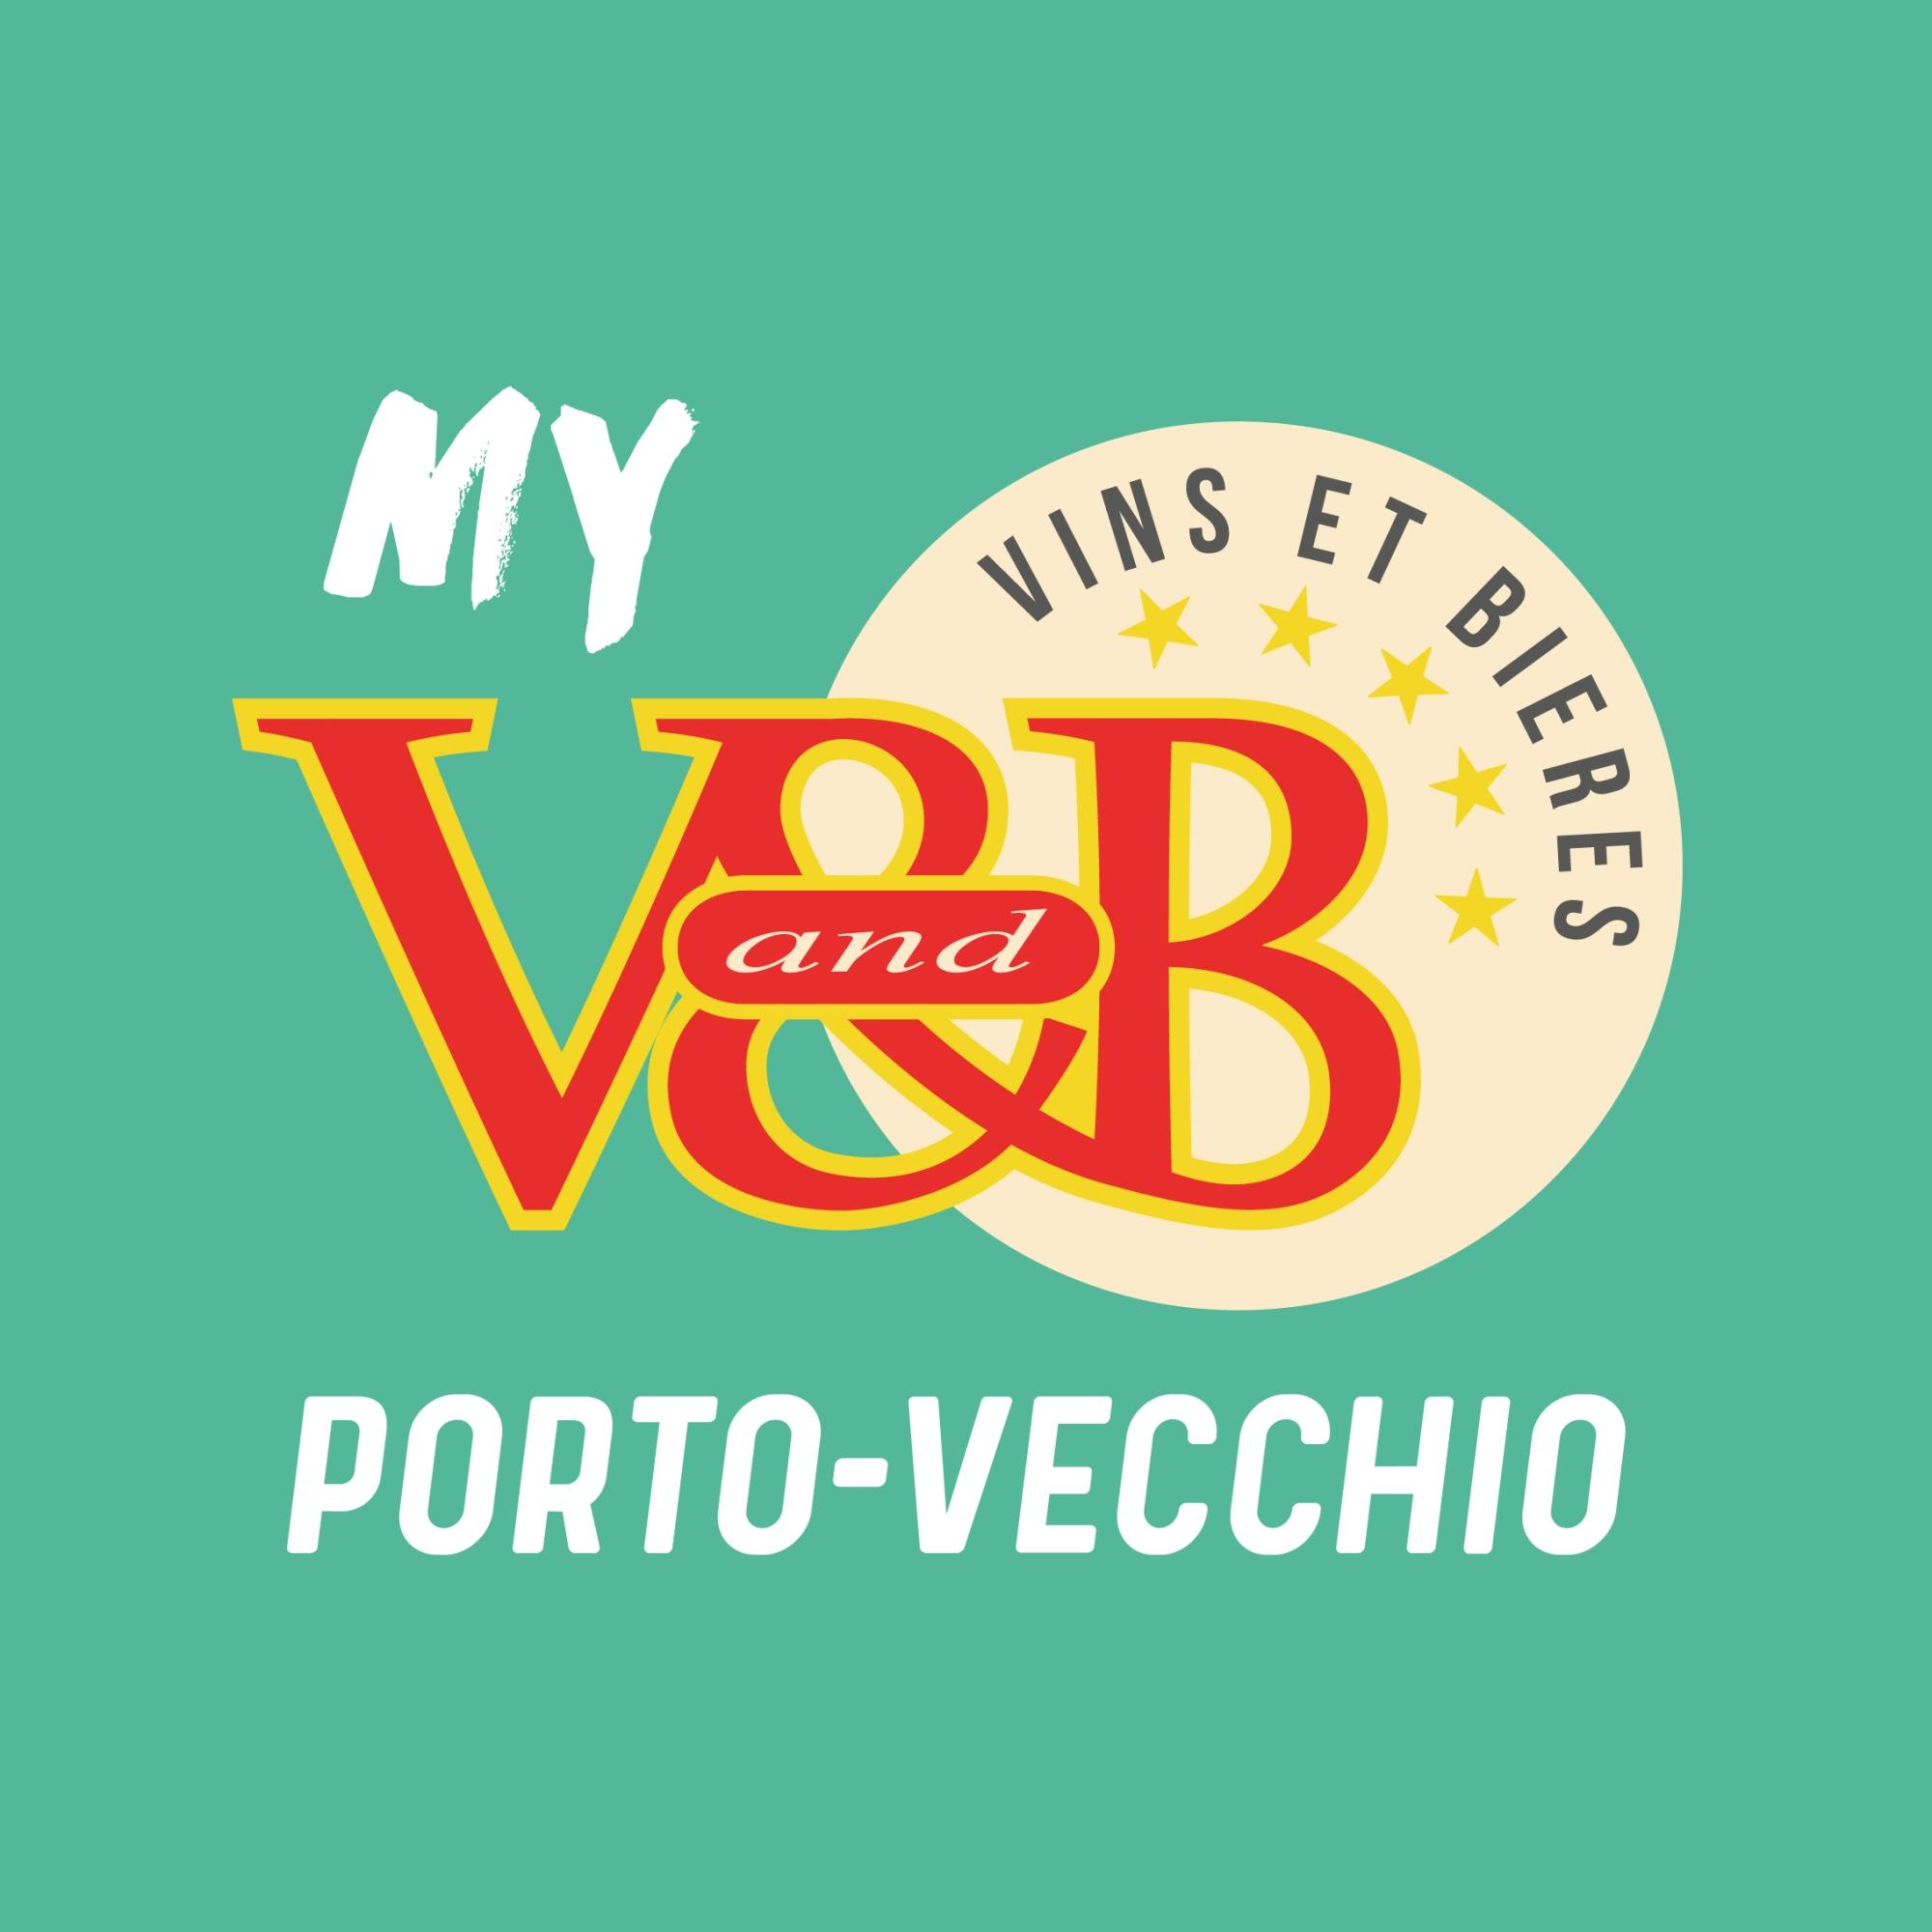 V And B Porto Vecchio